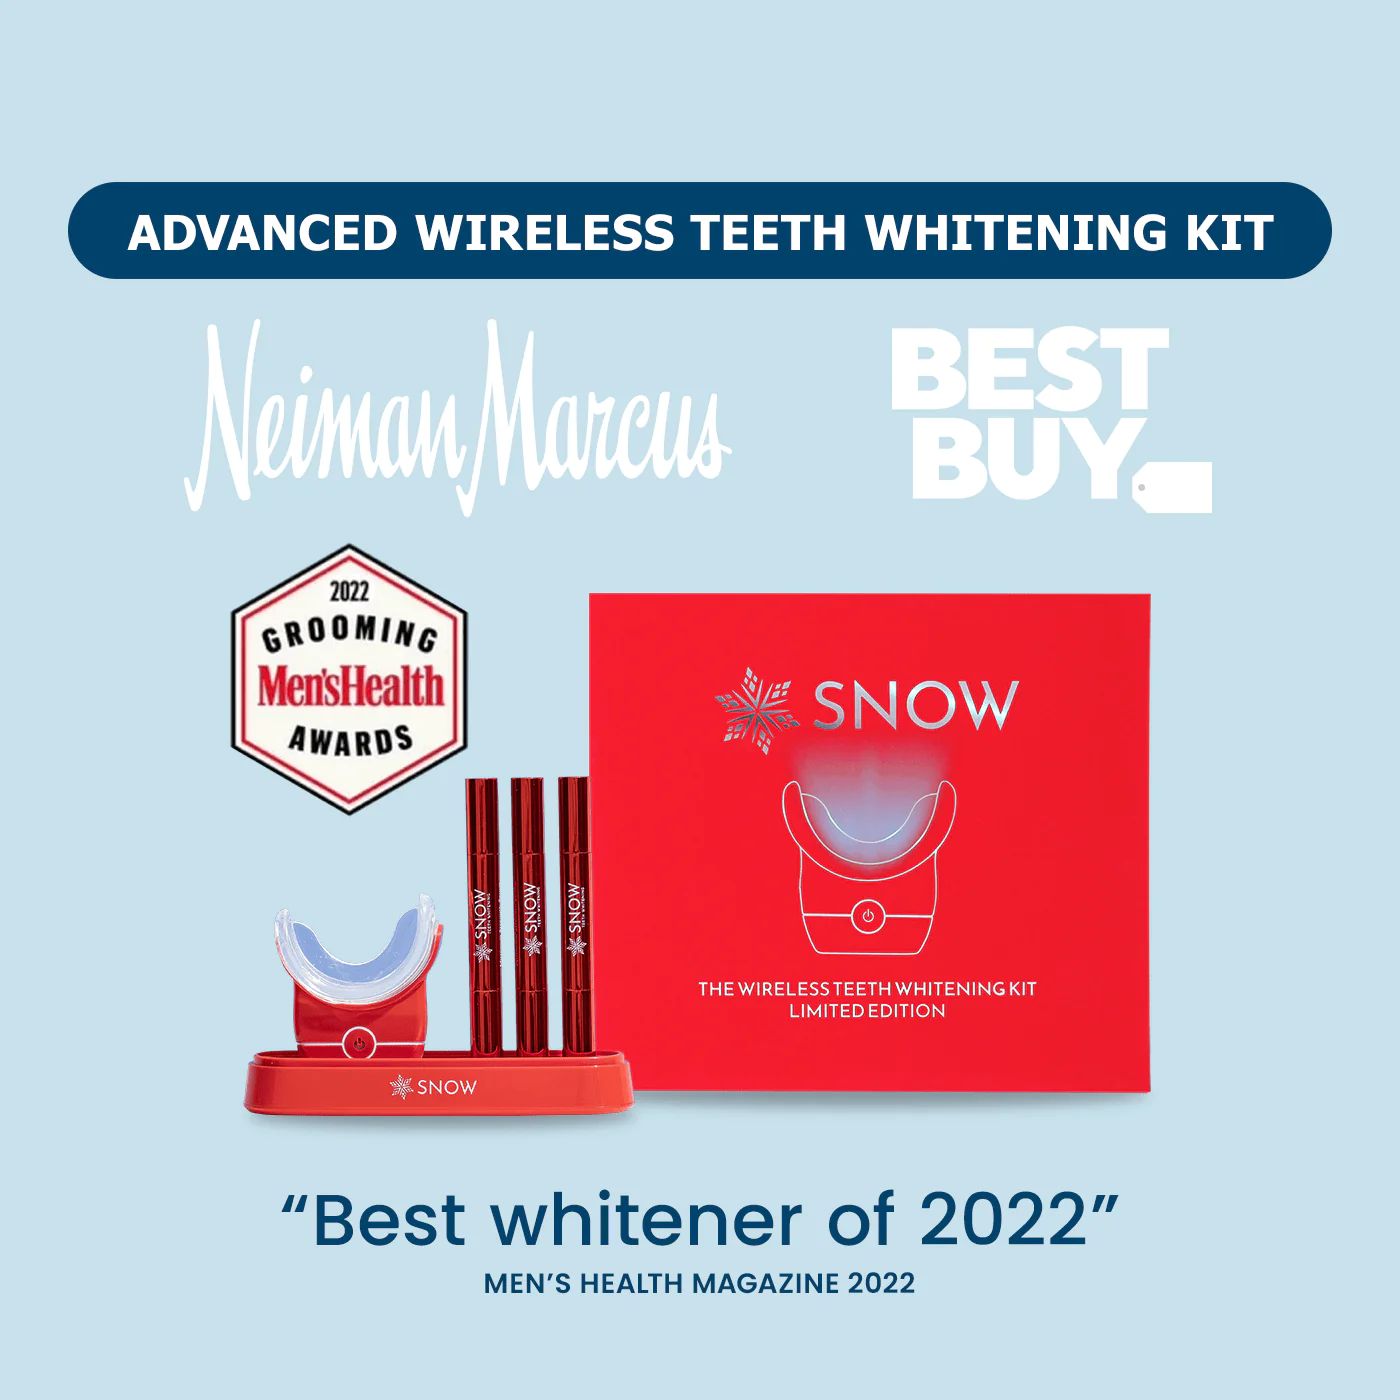 Advanced Wireless Teeth Whitening Kit | Try Snow